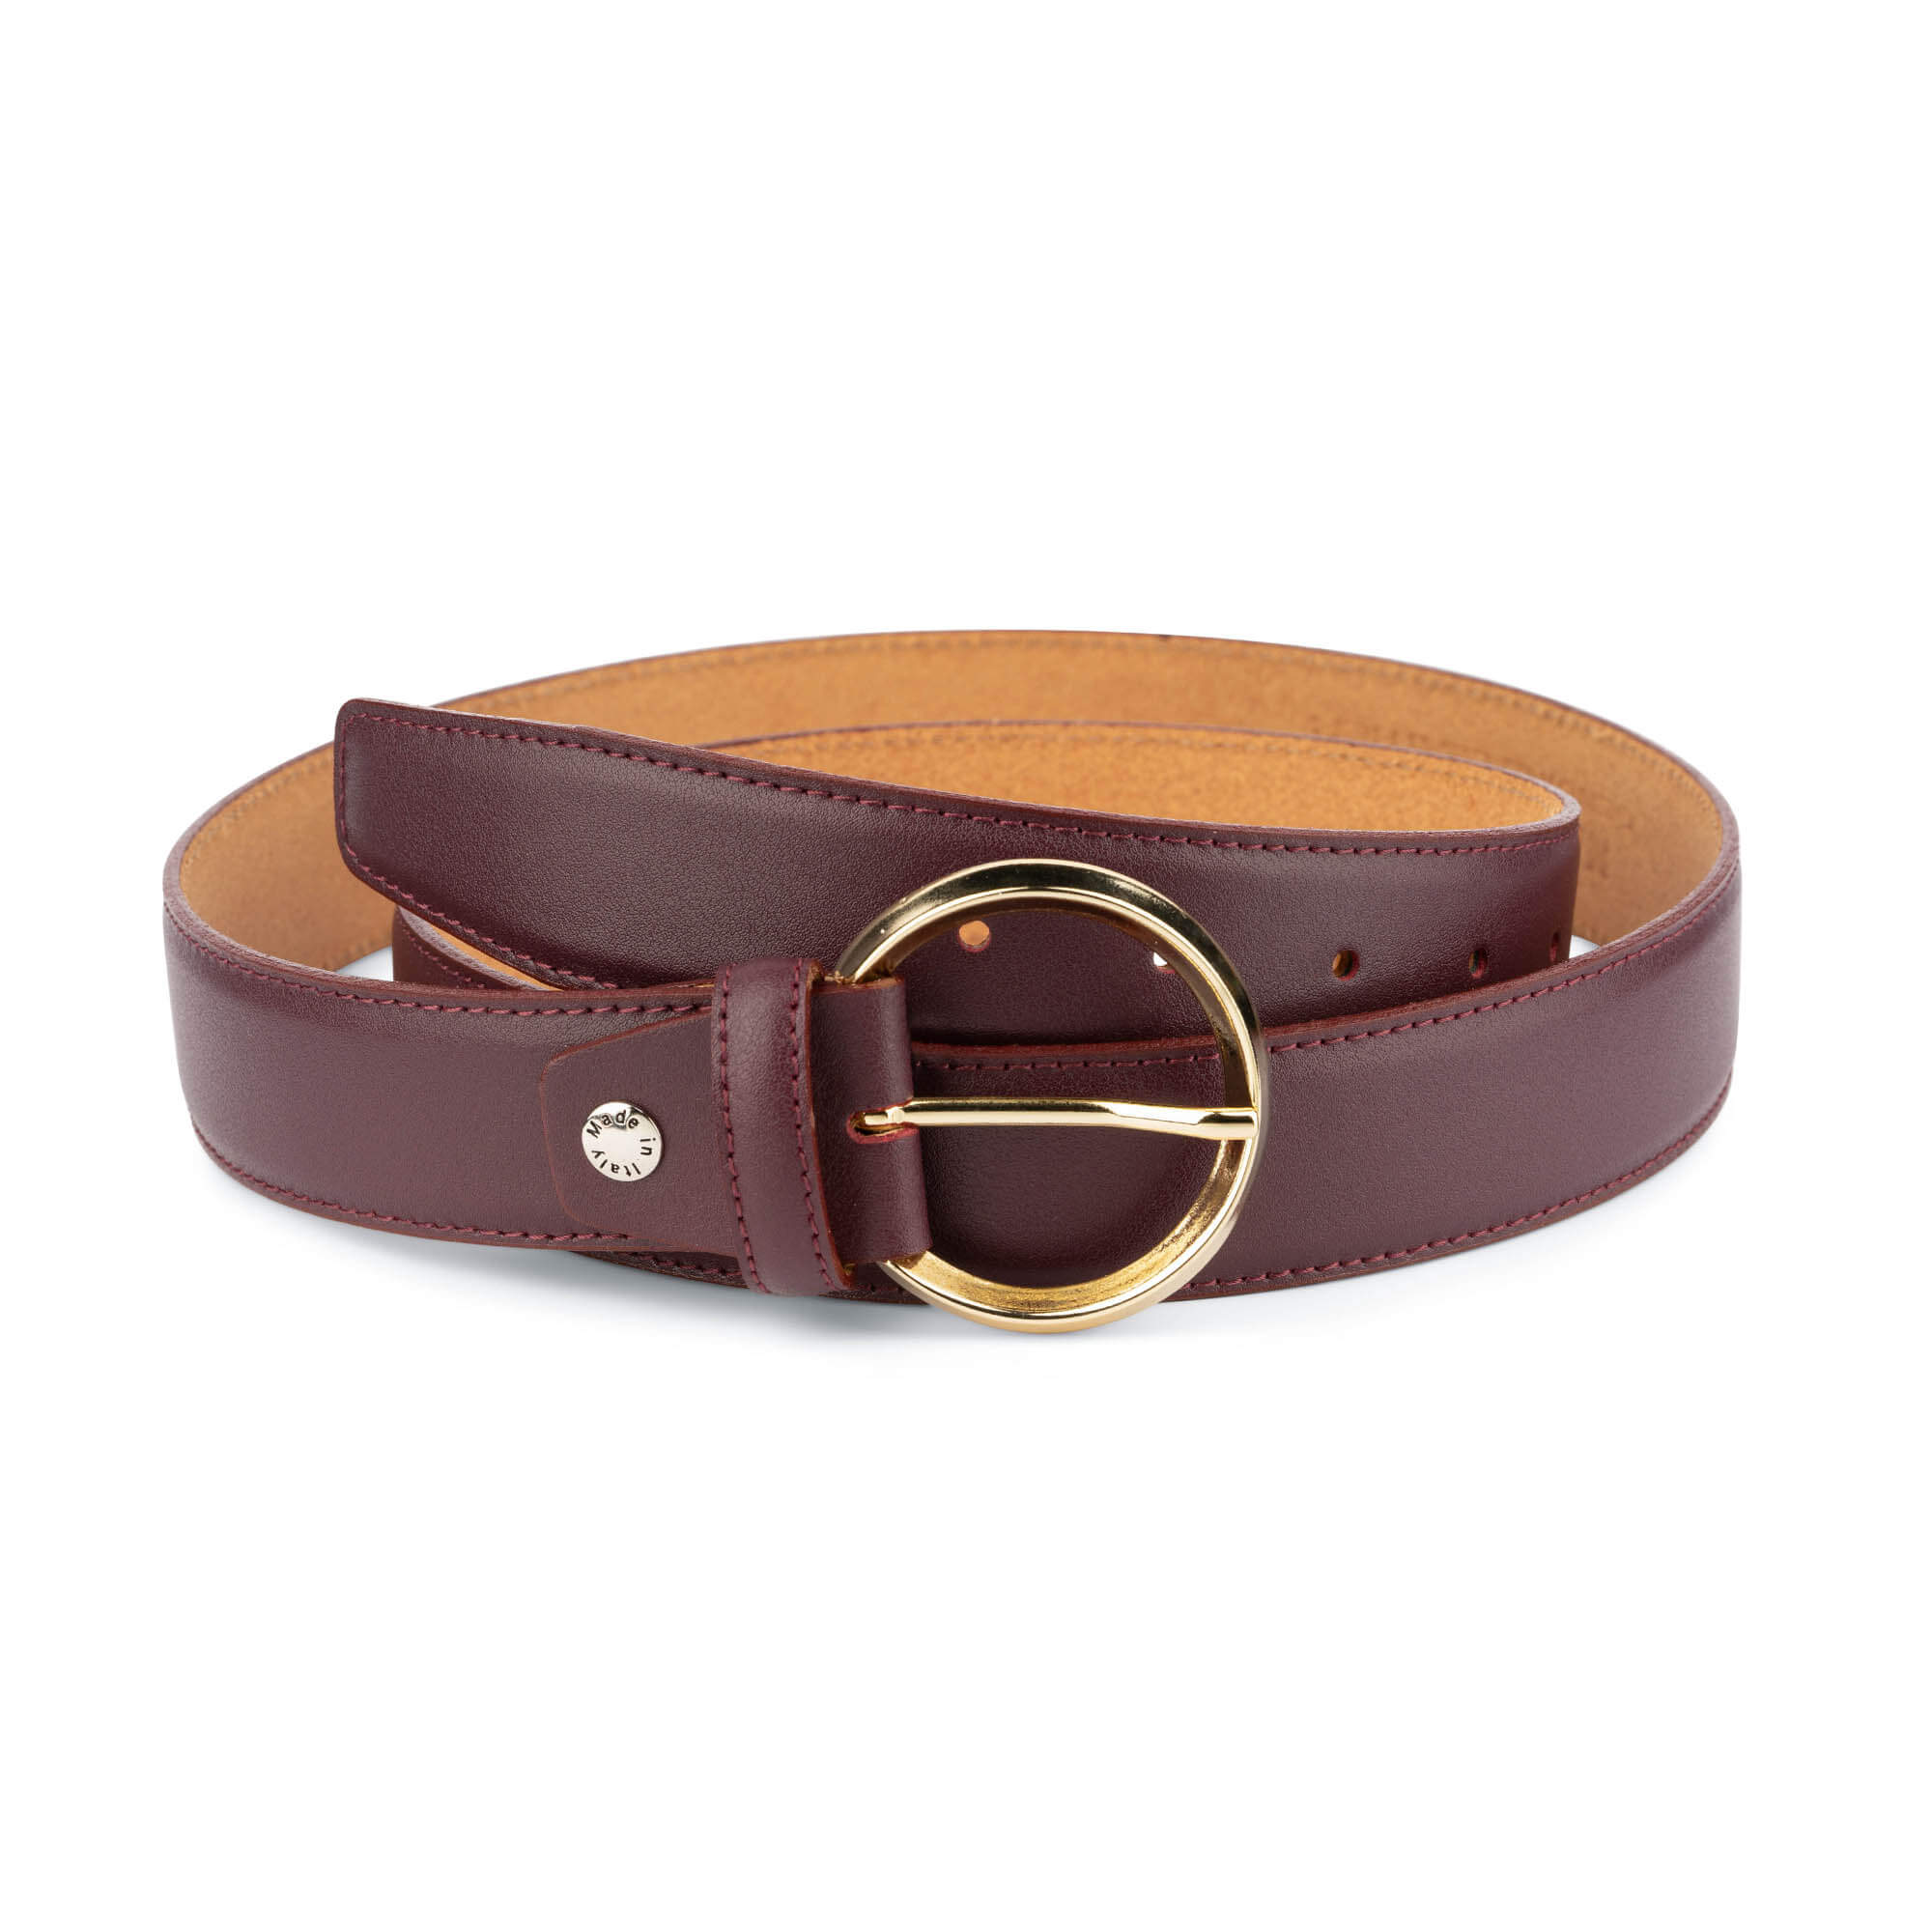 Buy Burgundy Leather Belt With Gold Circle Buckle | LeatherBeltsOnline